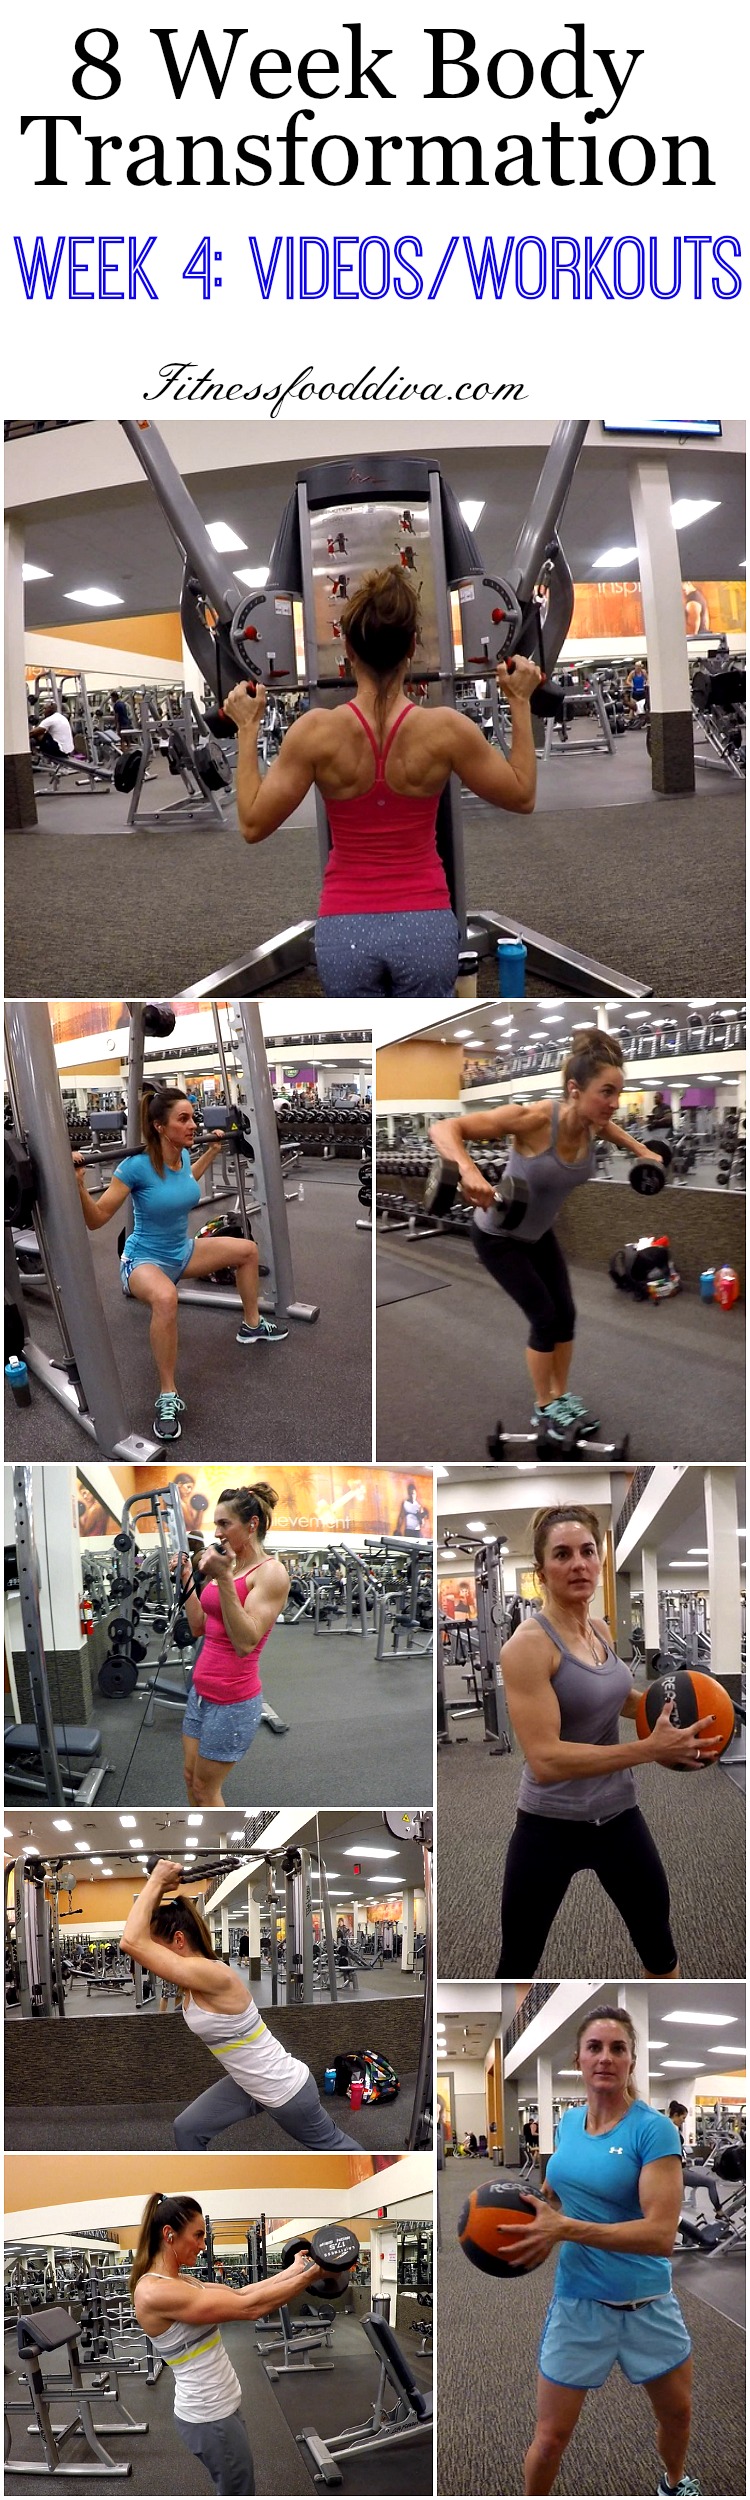 8 Week Body Transformation: Week 4 Videos/Workouts ...